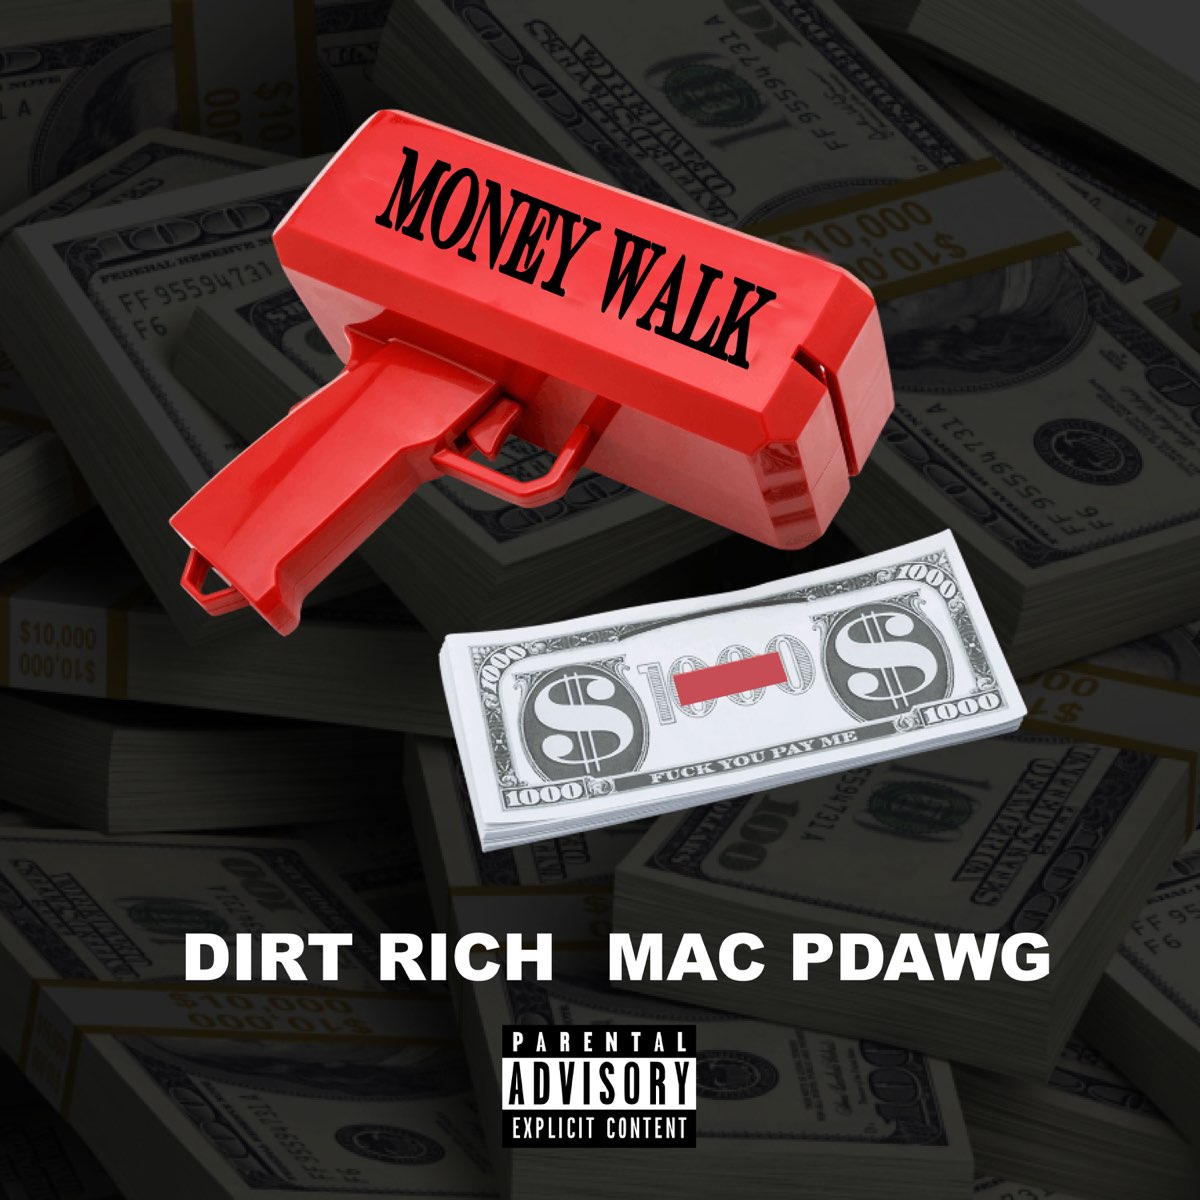 Куплю за деньги песня. Money walk. The Dirty Rich. PDAWG это. Mac p Dawg.